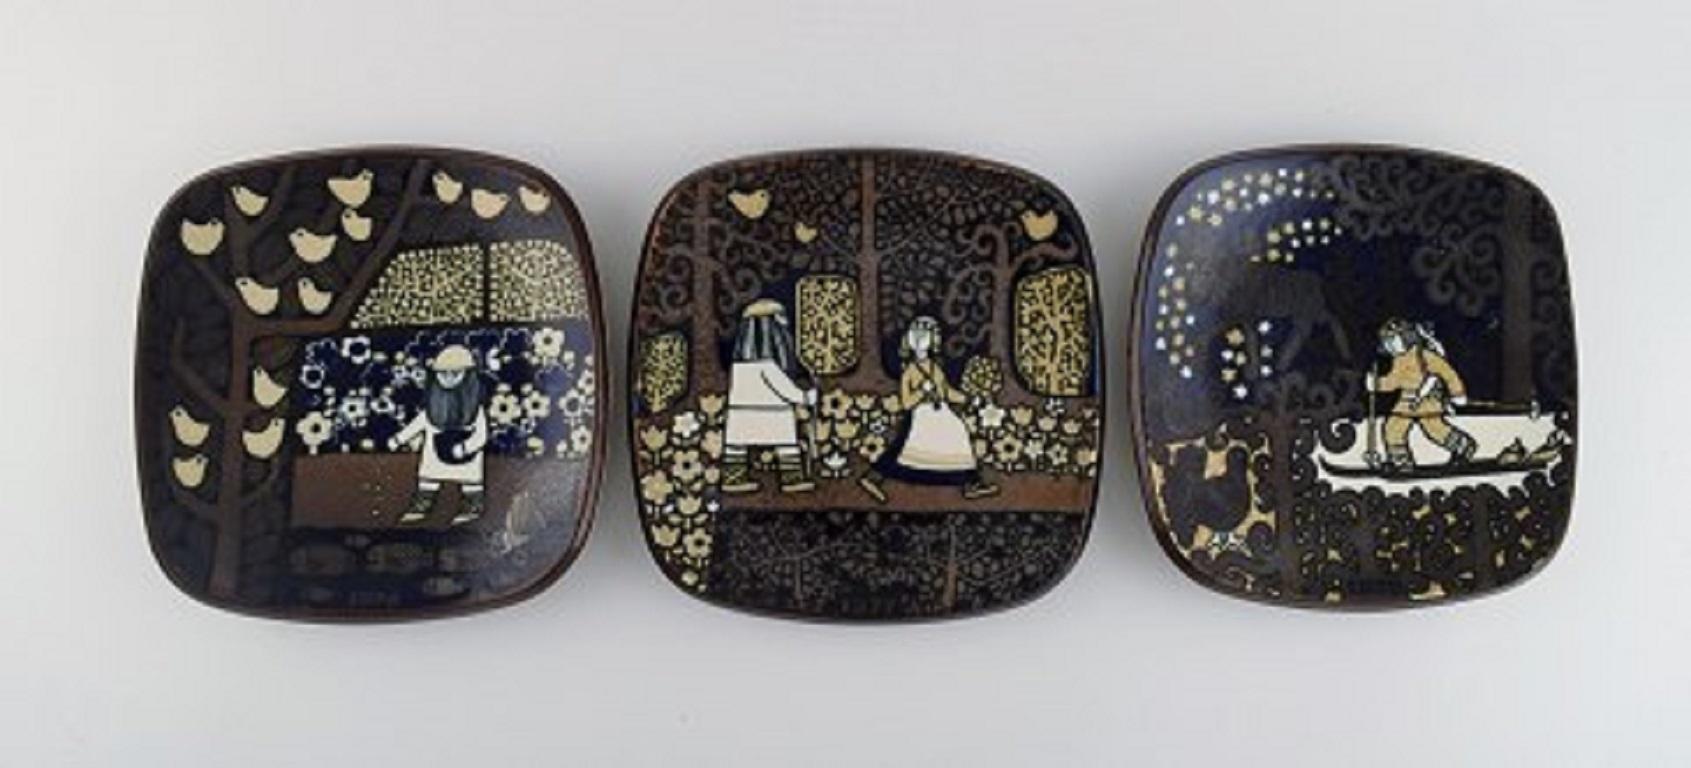 Hand-Painted Raija Uosikkinen for Arabia, Set of 15 Kalevala Year Plates in Glazed Ceramics